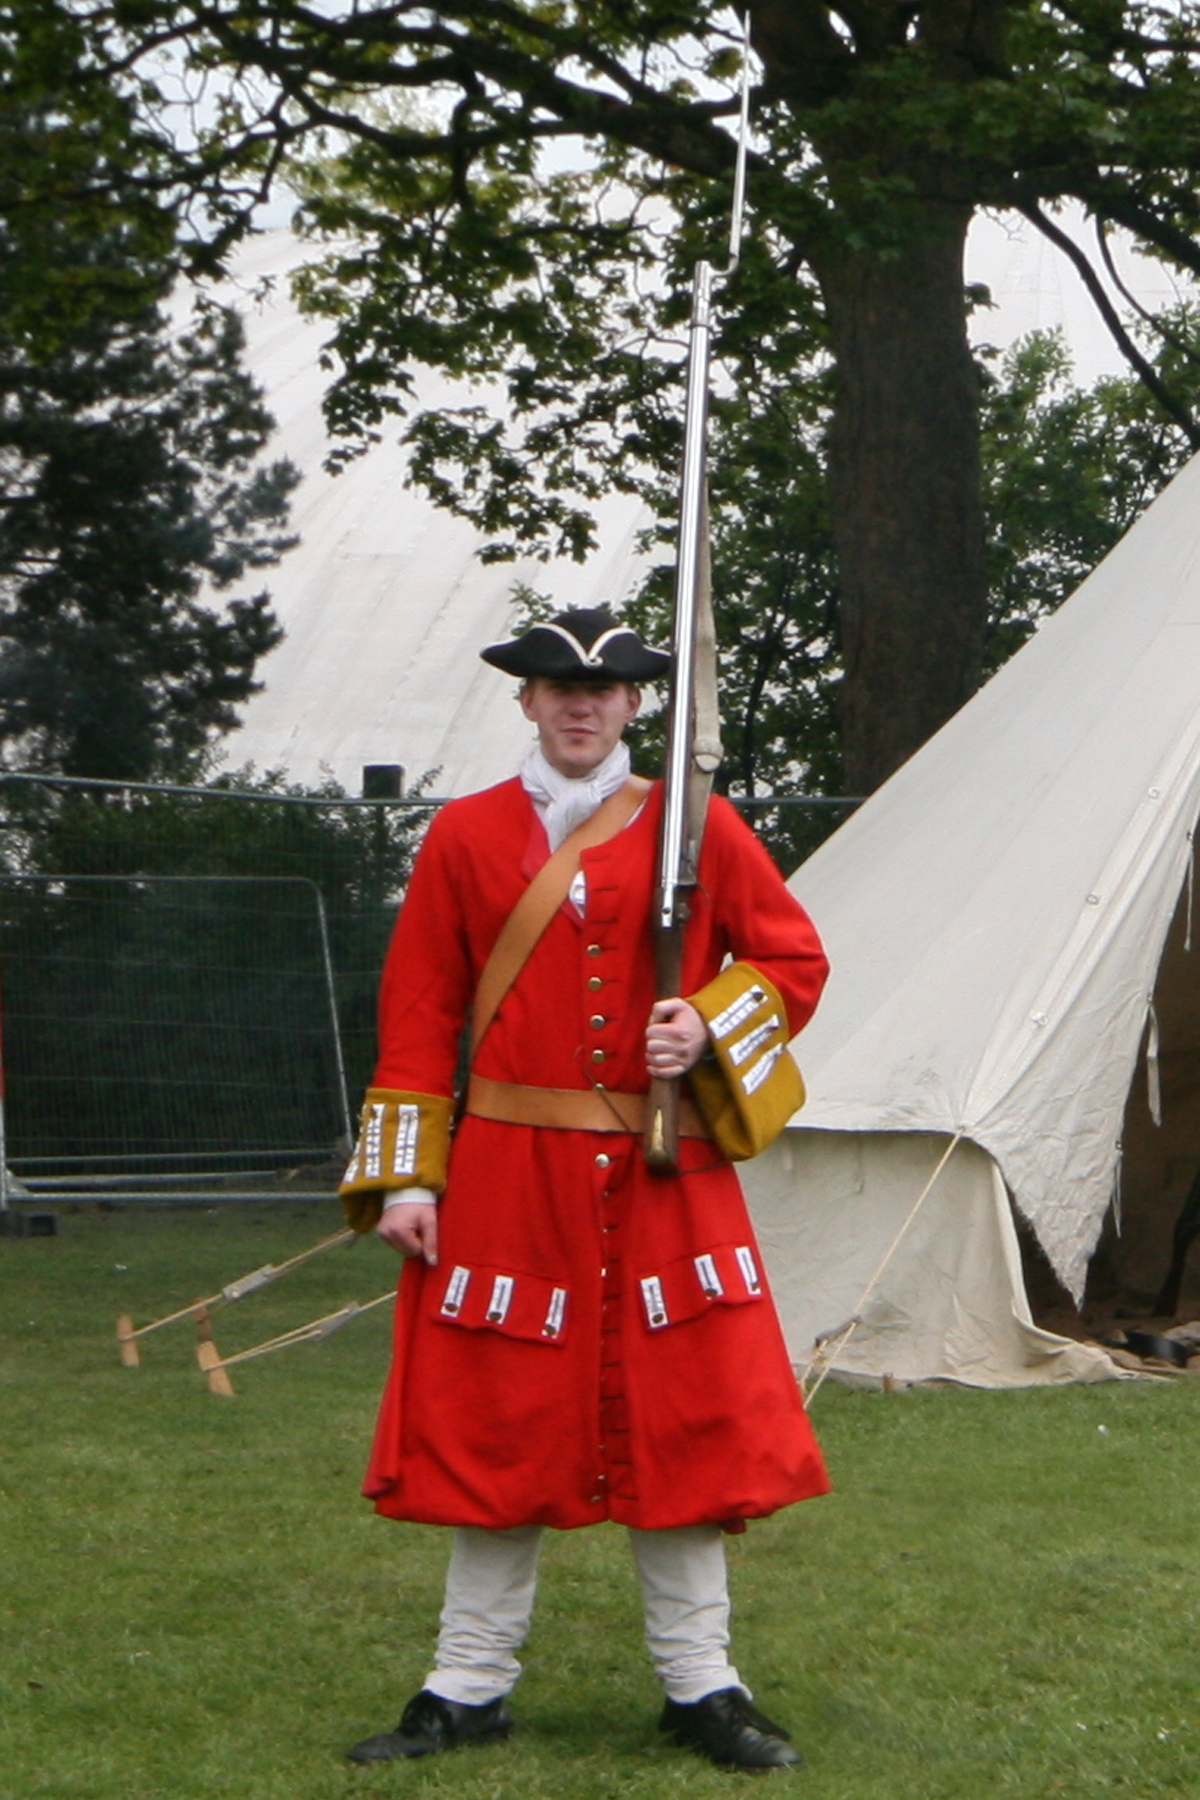 A member of Veritas Vincit military re-enactment group in typical 1715 infantry uniform